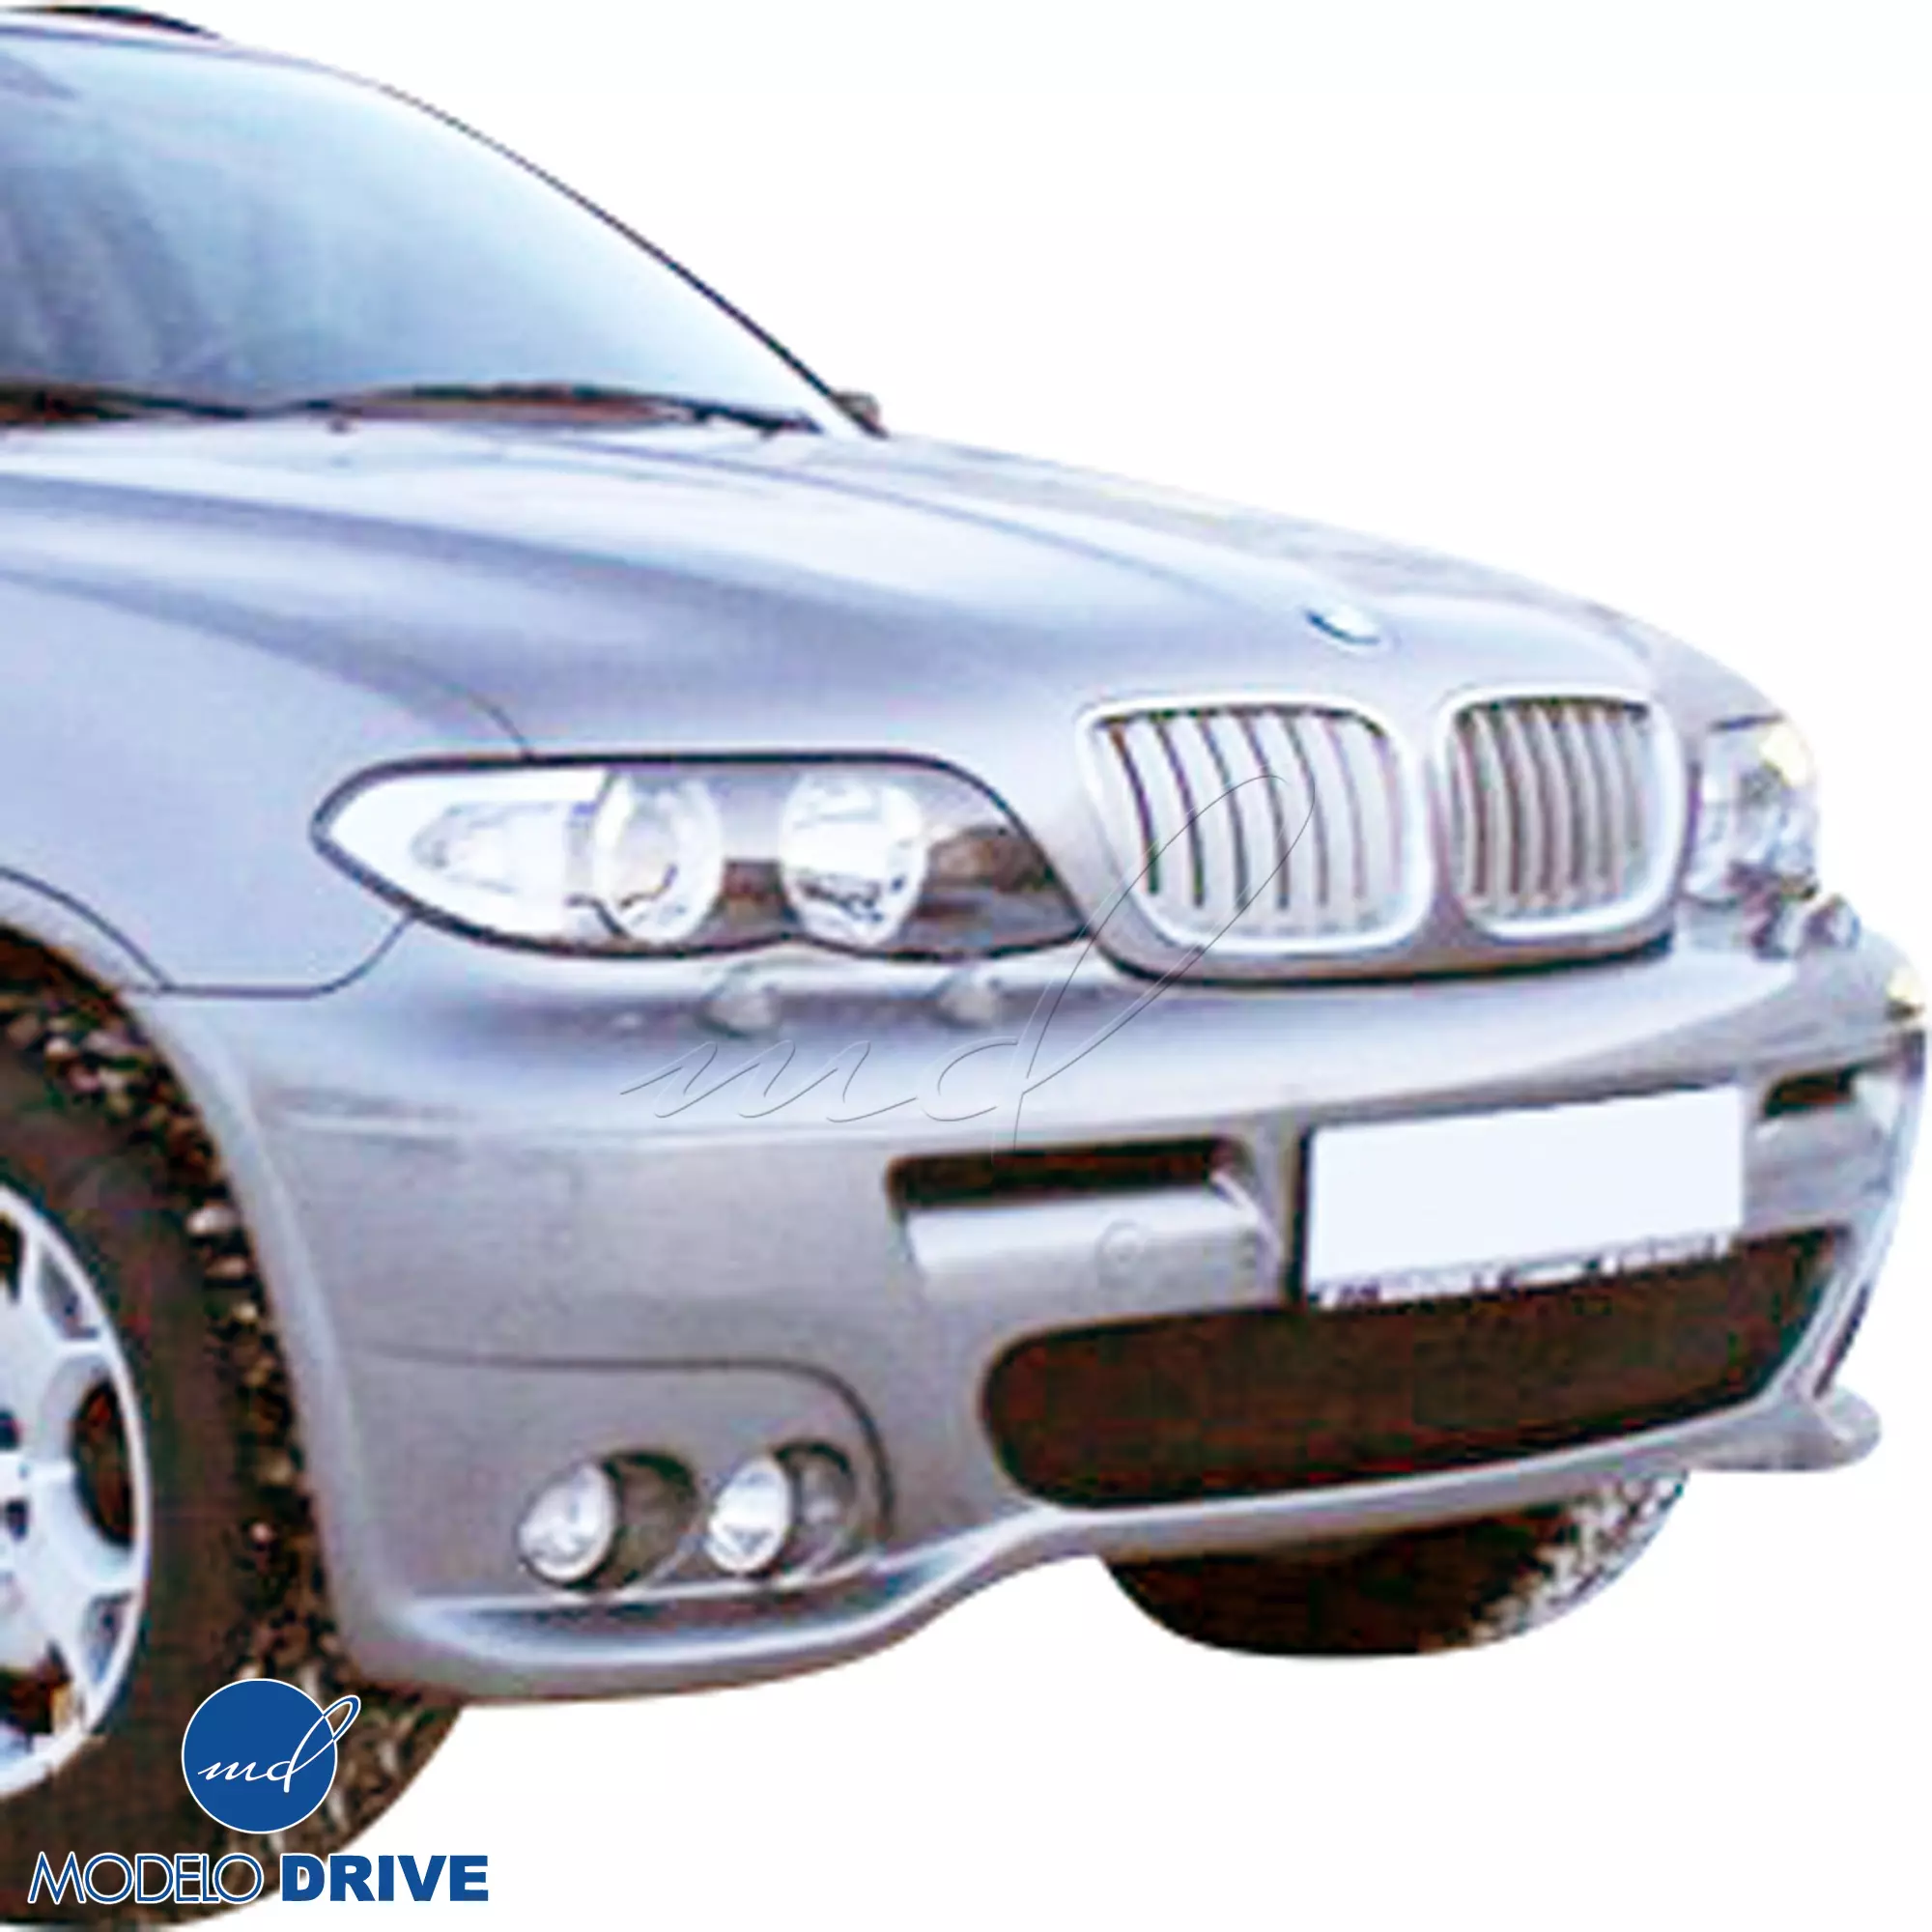 ModeloDrive FRP HAMA Body Kit 3pc > BMW X5 E53 2000-2006 > 5dr - Image 3